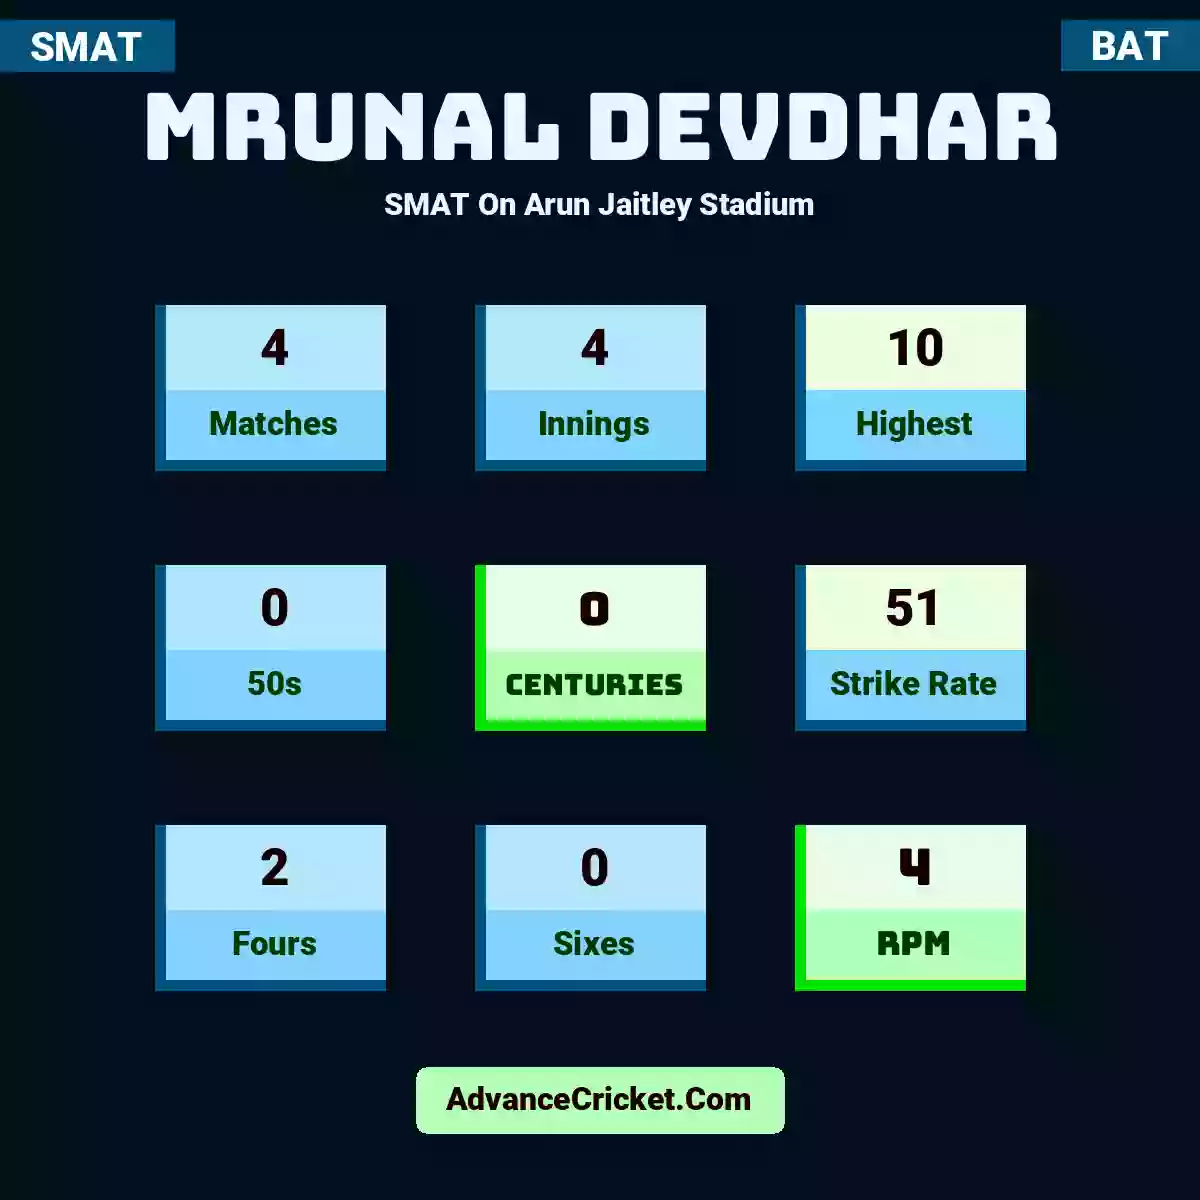 Mrunal Devdhar SMAT  On Arun Jaitley Stadium, Mrunal Devdhar played 4 matches, scored 10 runs as highest, 0 half-centuries, and 0 centuries, with a strike rate of 51. M.Devdhar hit 2 fours and 0 sixes, with an RPM of 4.